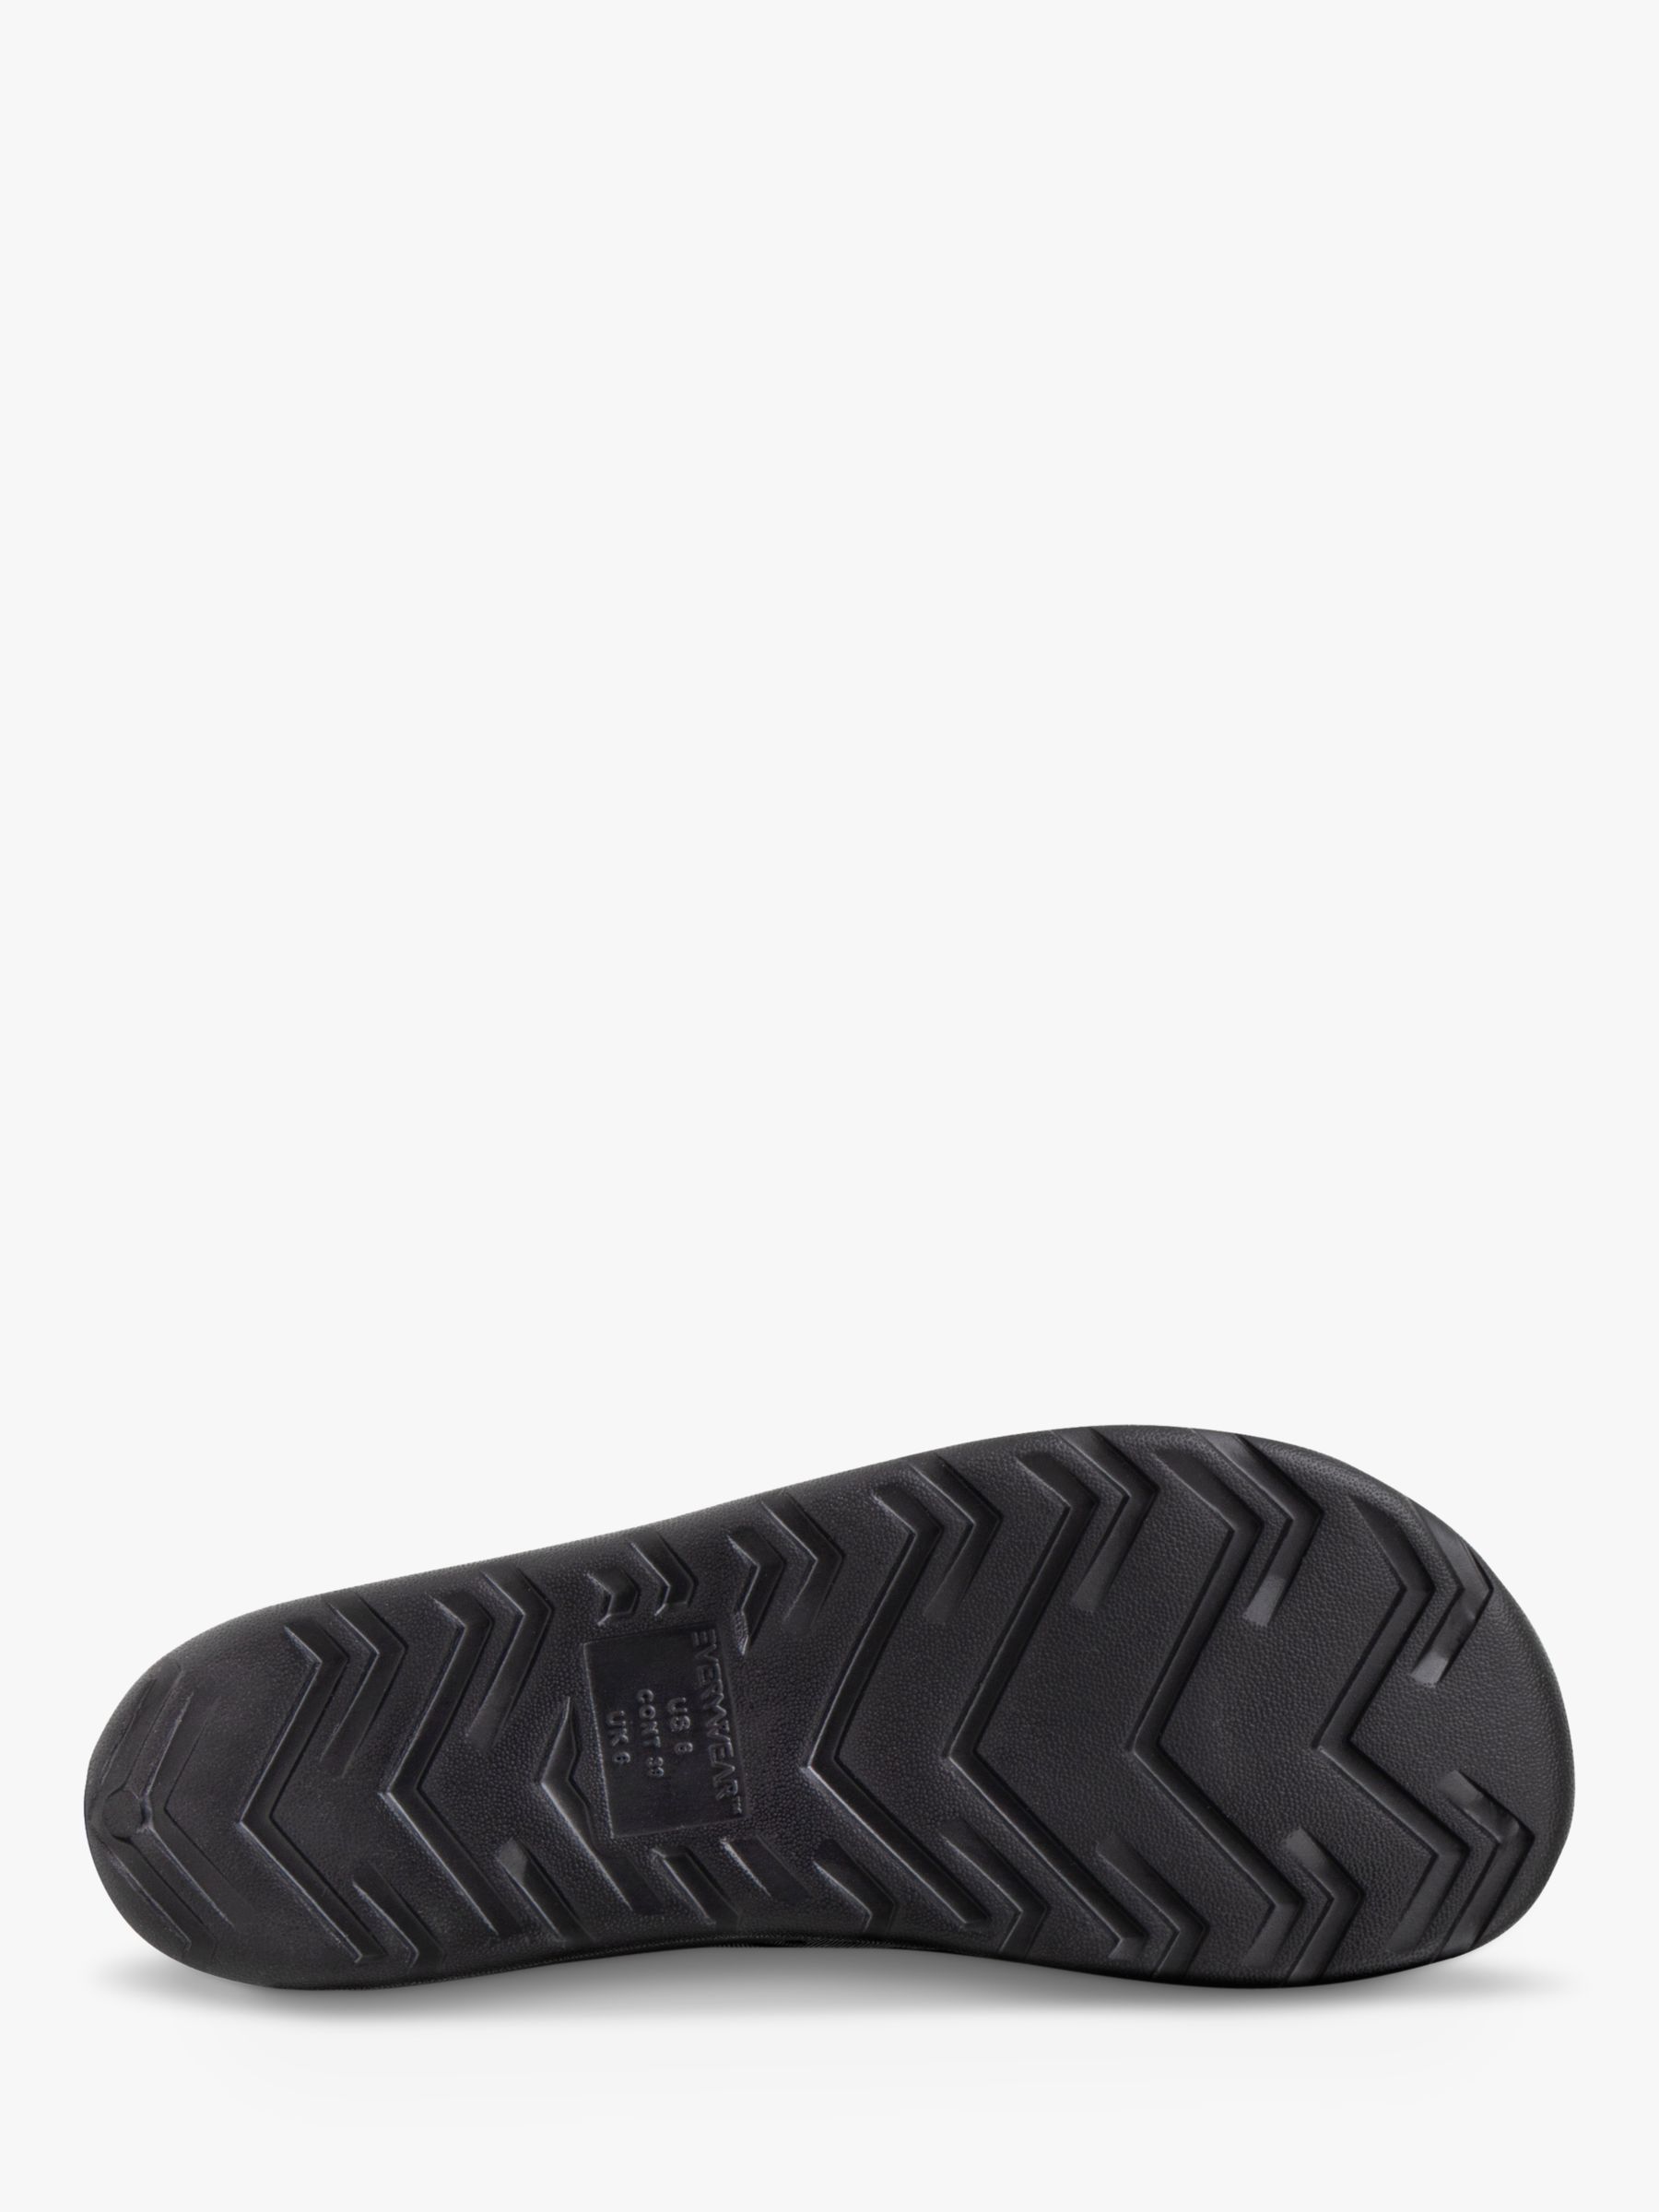 totes SOLBOUNCE Vented Slider Sandals, Black at John Lewis & Partners